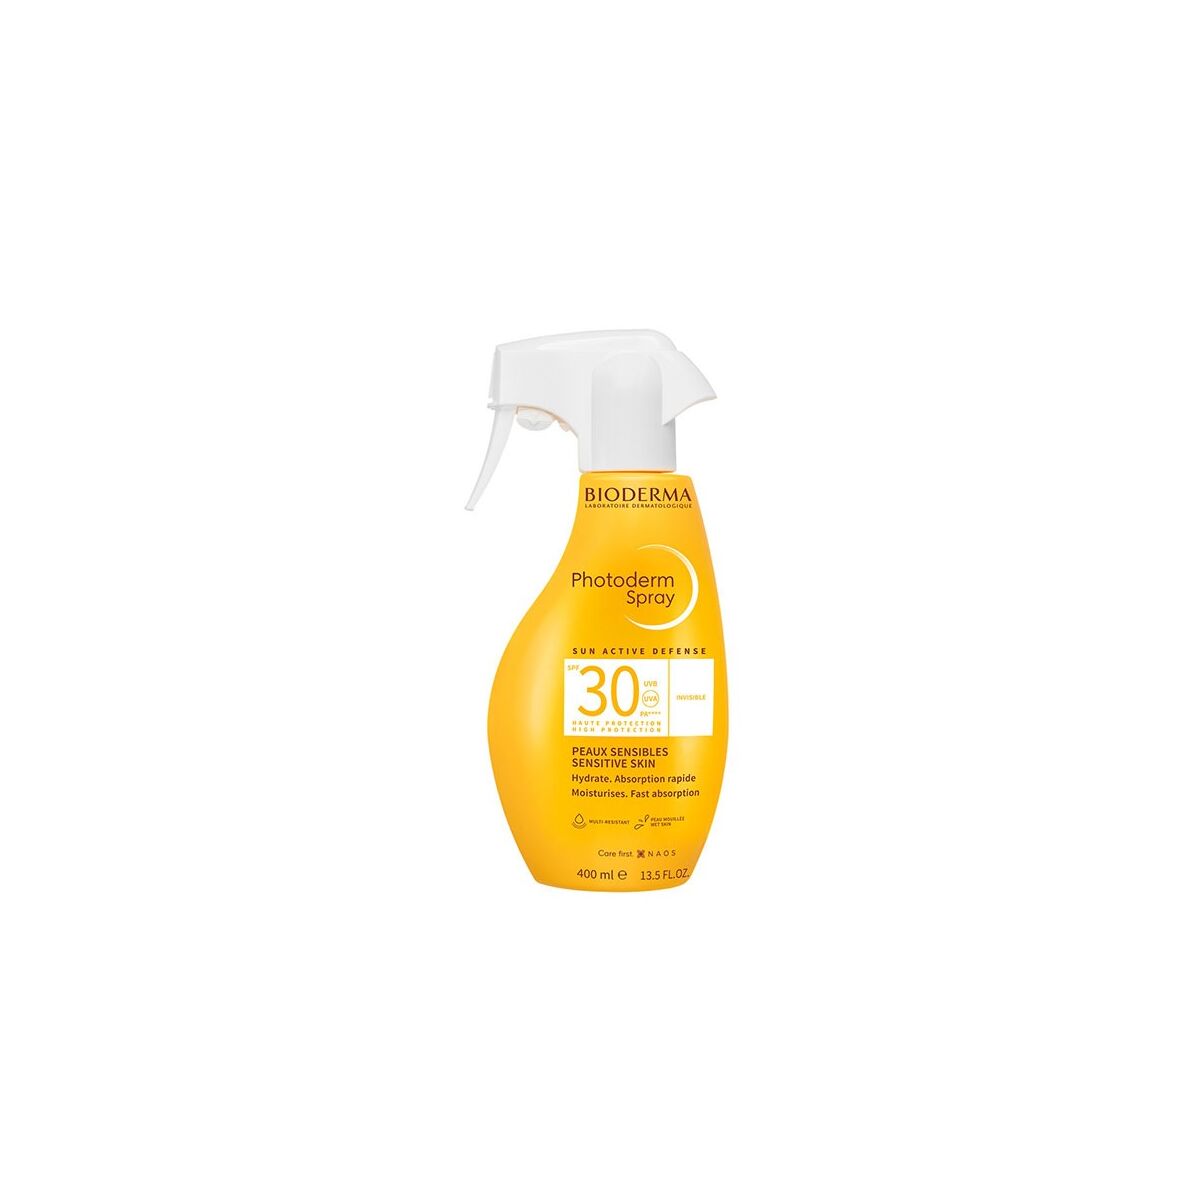 Body Sunscreen Spray Bioderma Photoderm Spf 30 400 ml